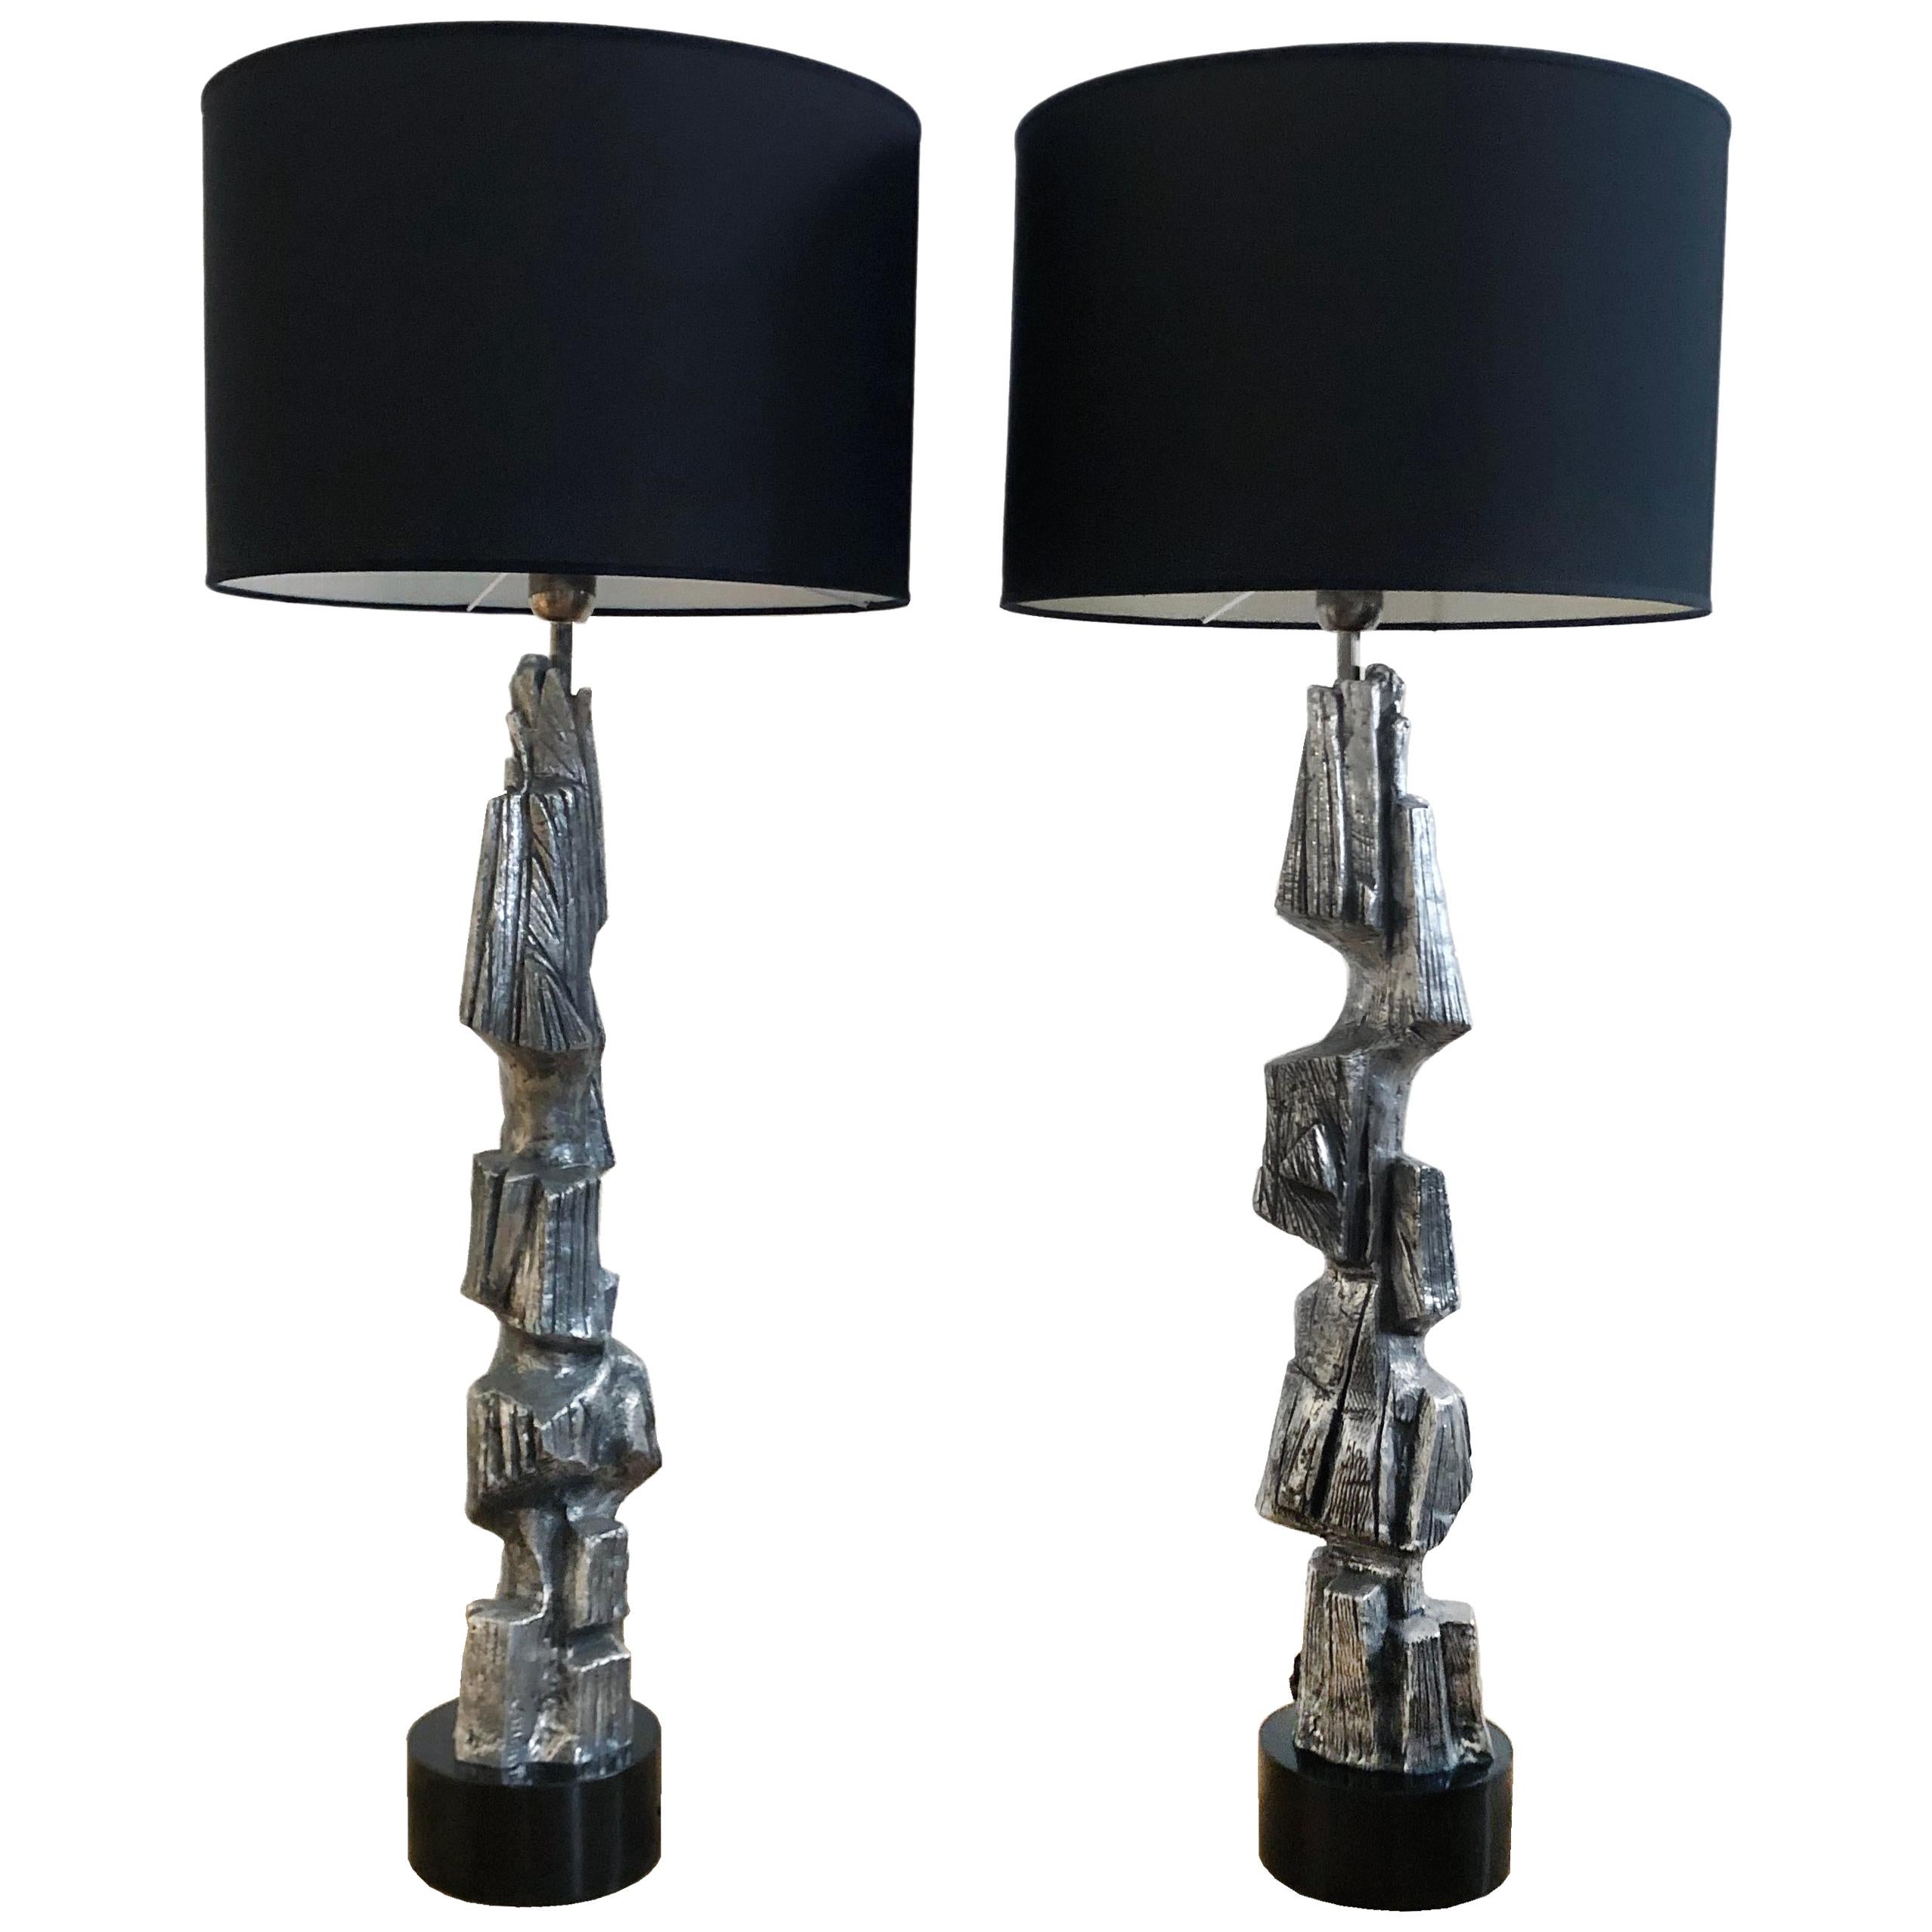 Pair of Large Brutalist Casted Aluminium Sculpture Table Lamps